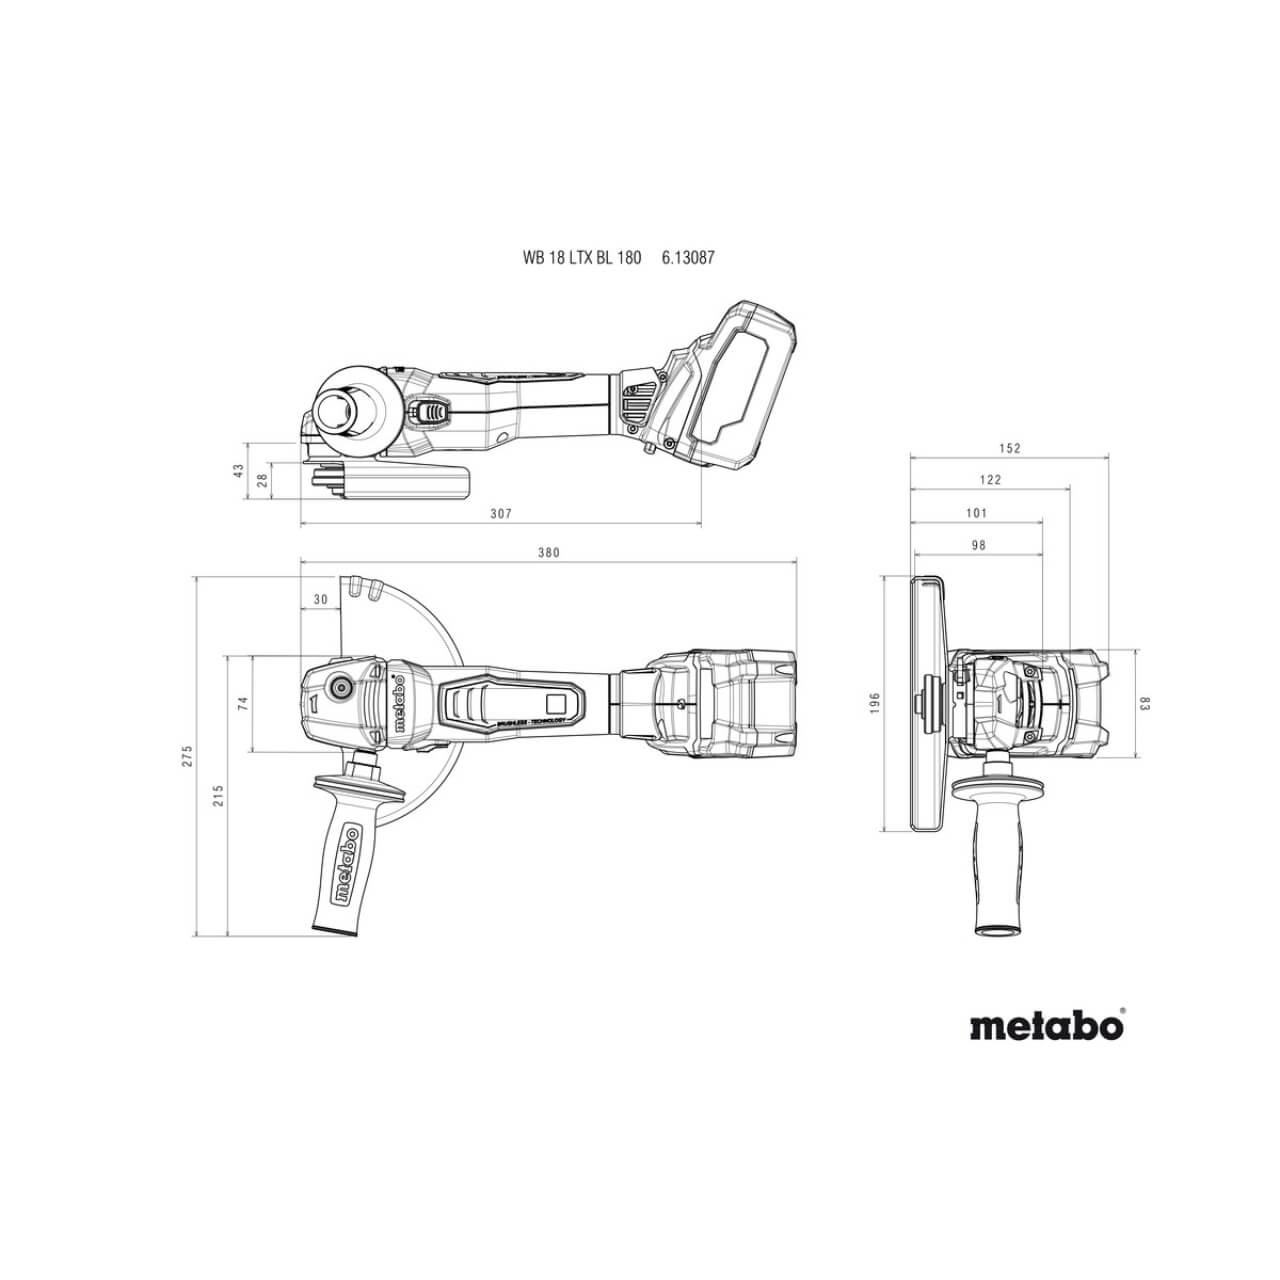 Metabo WP 18 LTX 125 QUICK 18V Brushless Angle Grinder 180mm with Brake - Skin Only